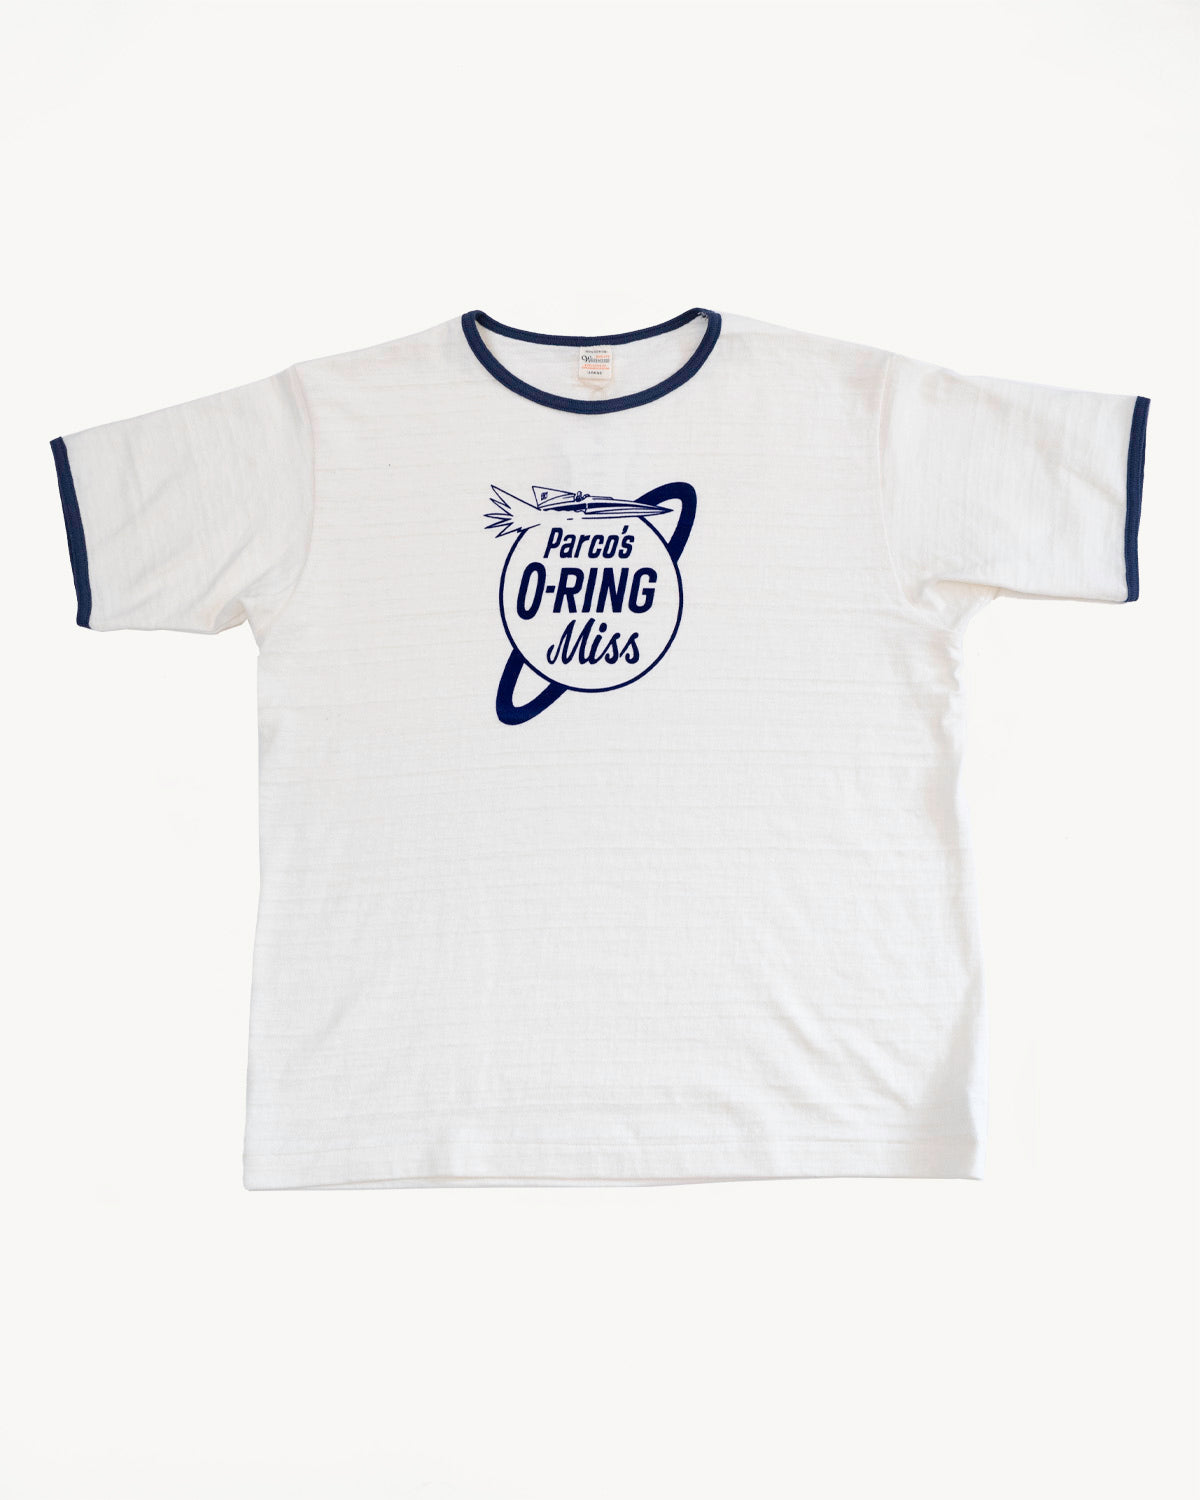 Lot 4059 - O-ring Ringer T-Shirt - Cream, Navy